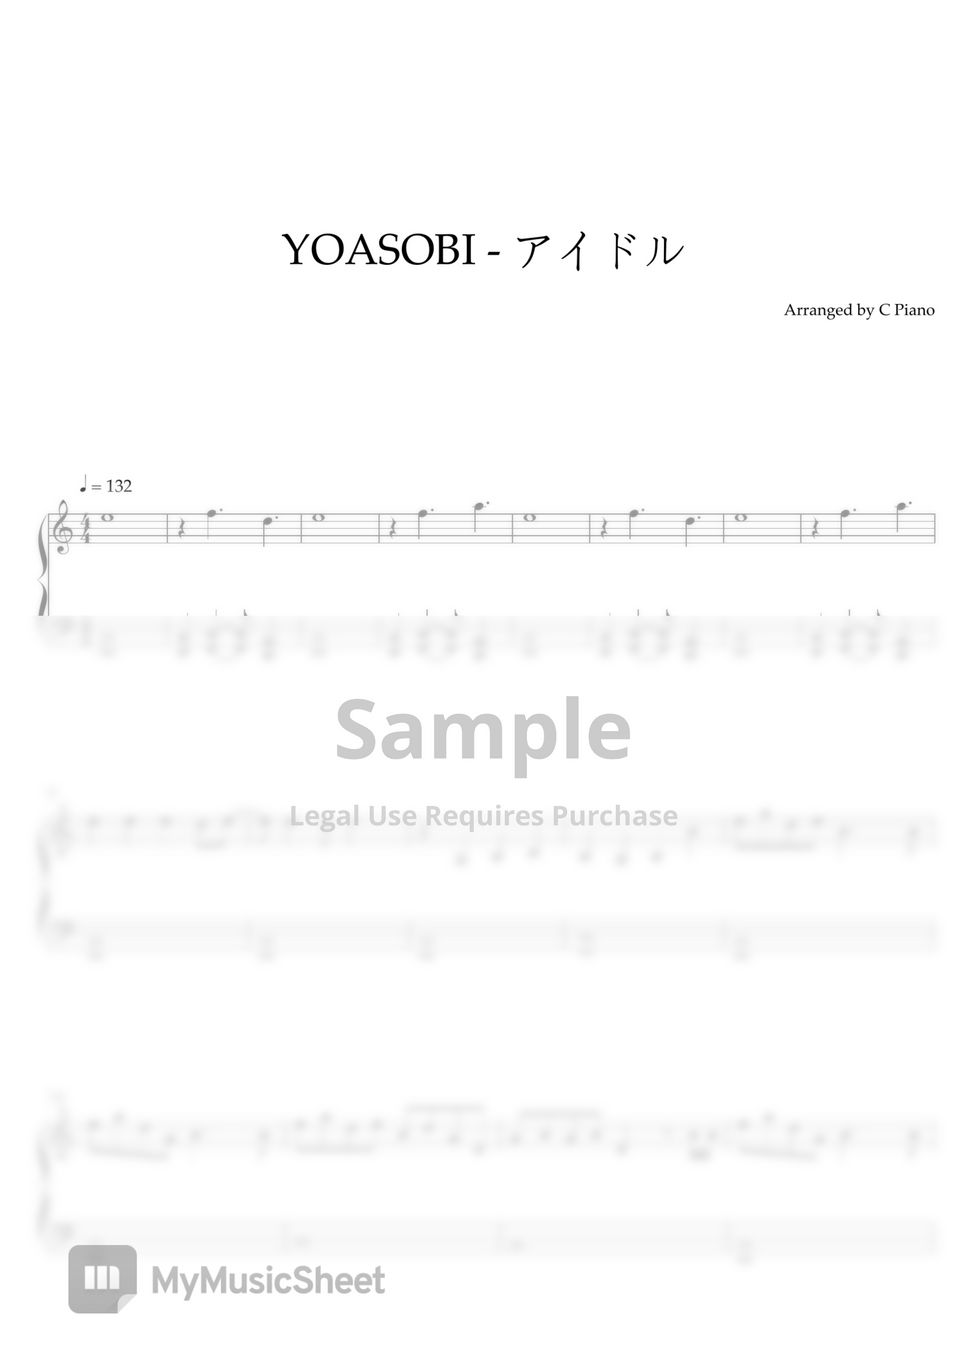 Yoasobi - Idol (Easy Version) by C Piano